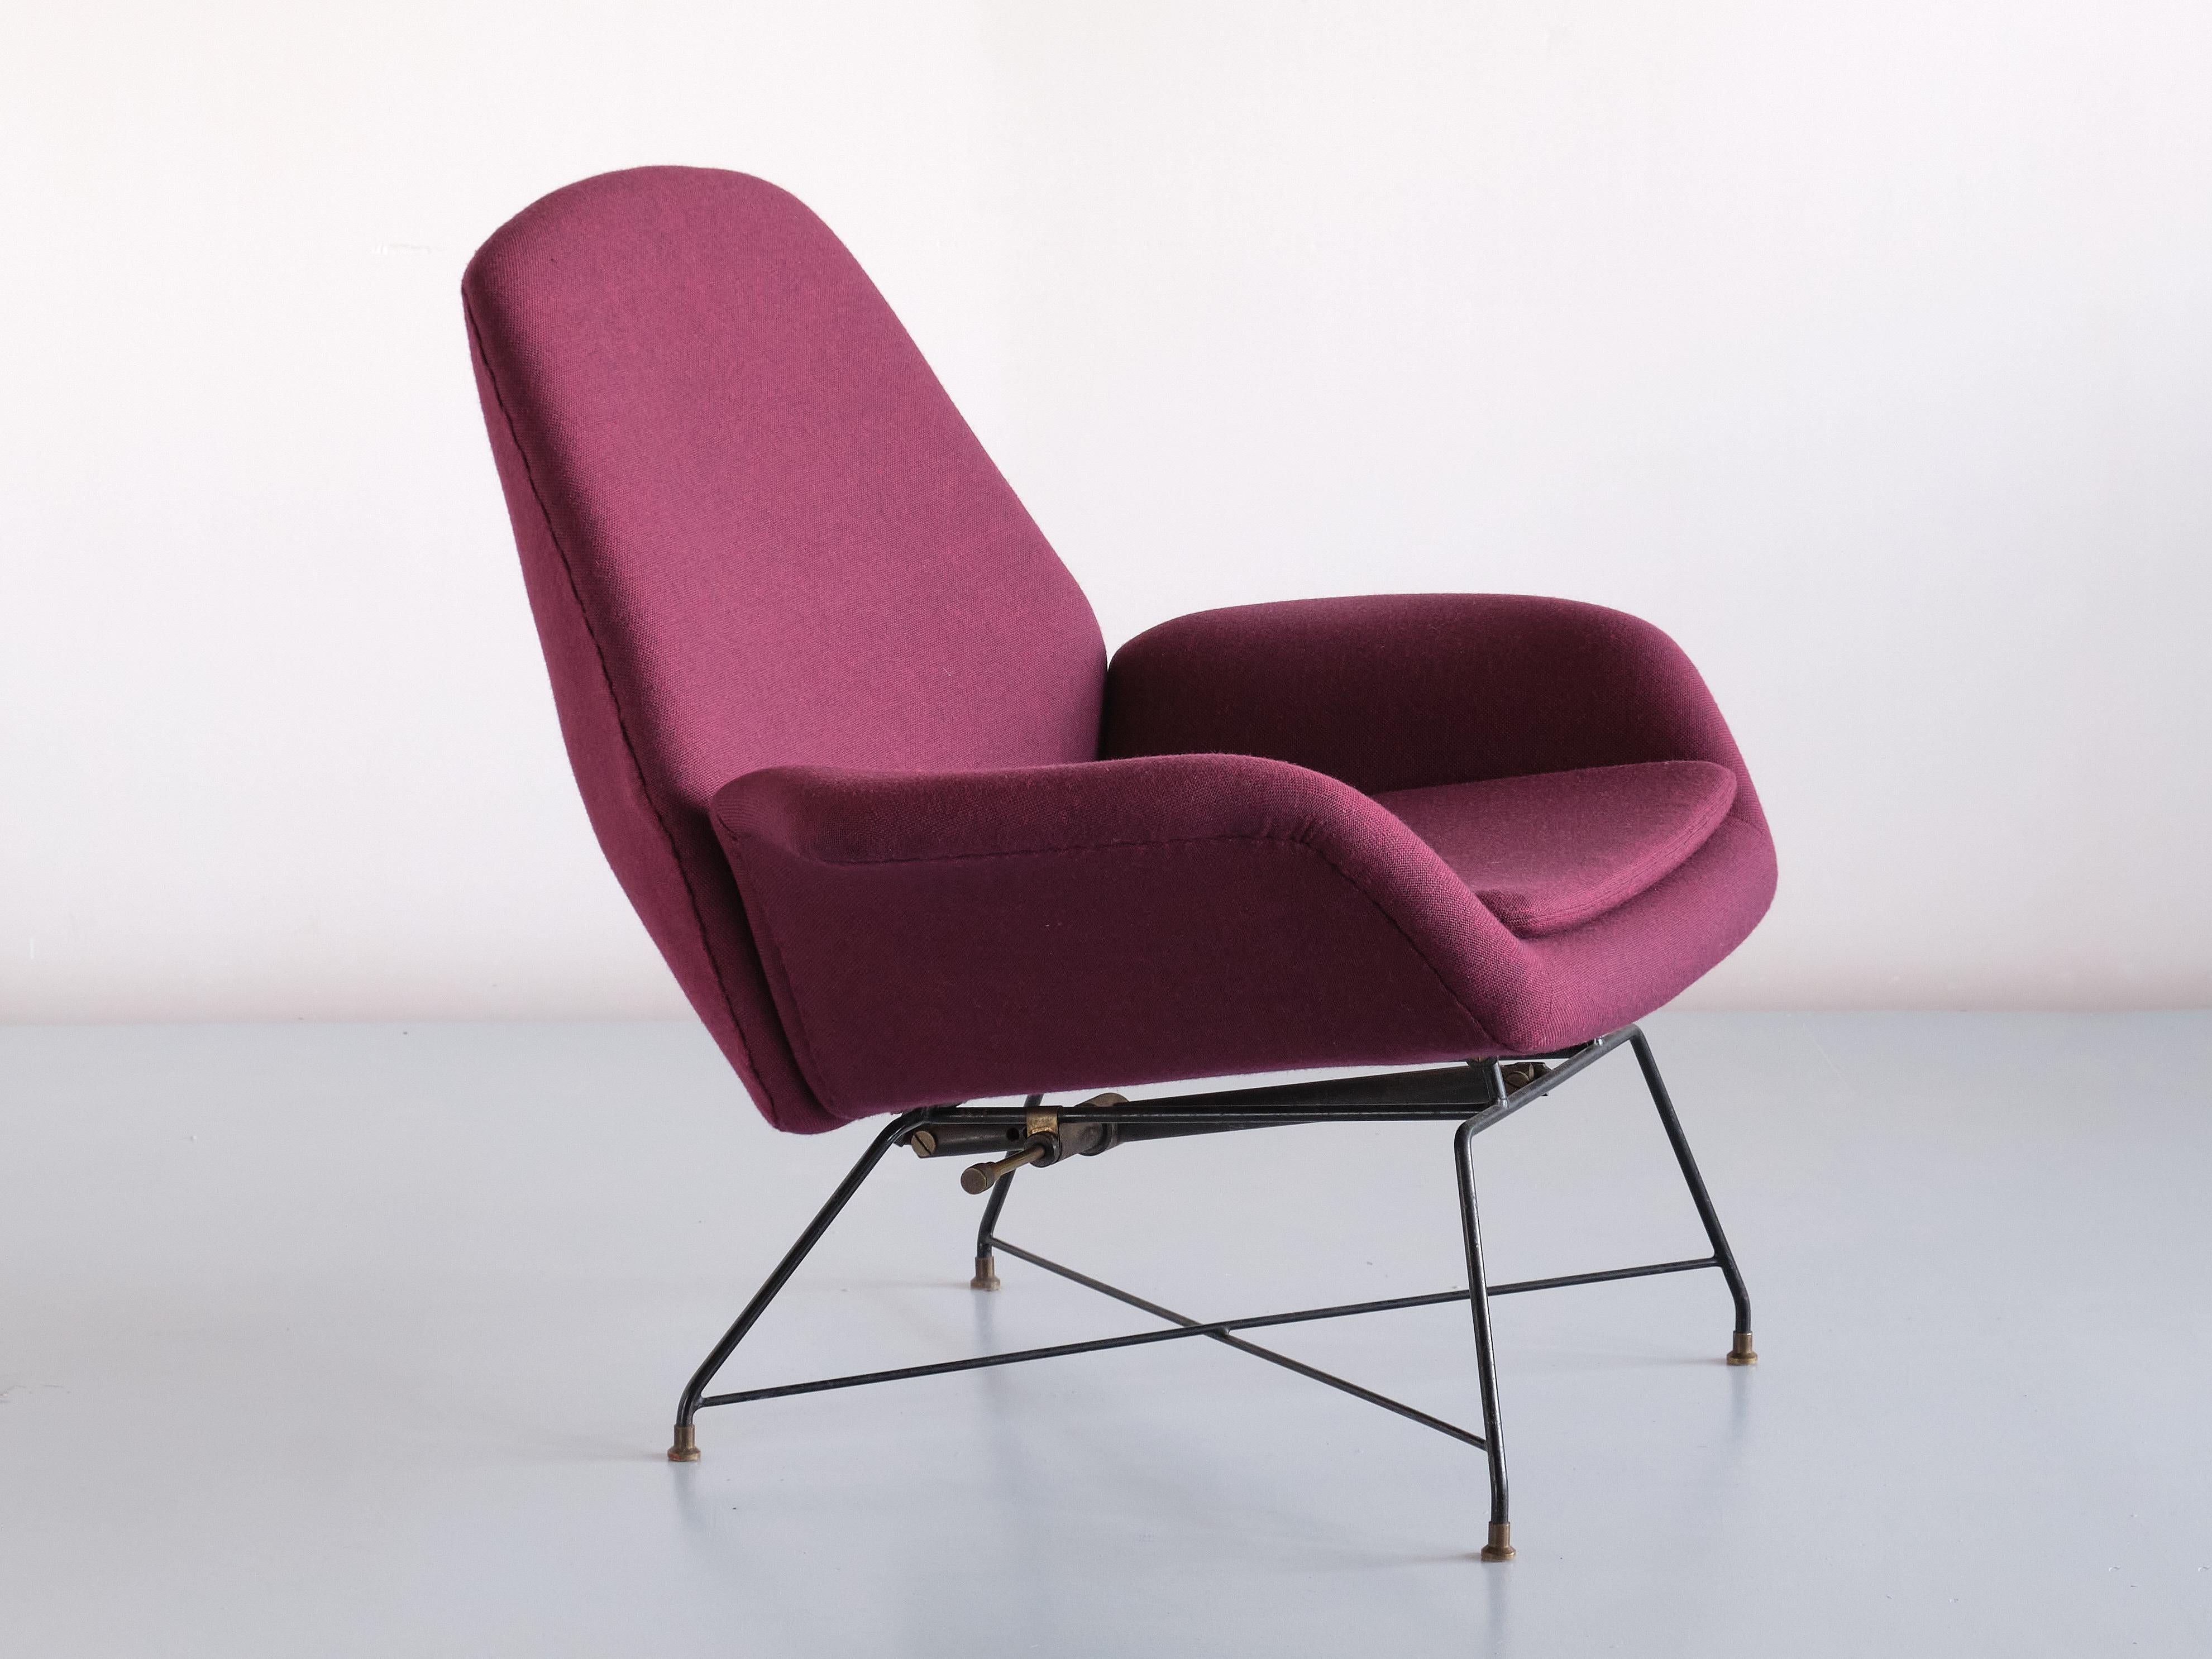 Metal Augusto Bozzi 'Lotus' Adjustable Lounge Chair, Saporiti, Italy, 1960s For Sale